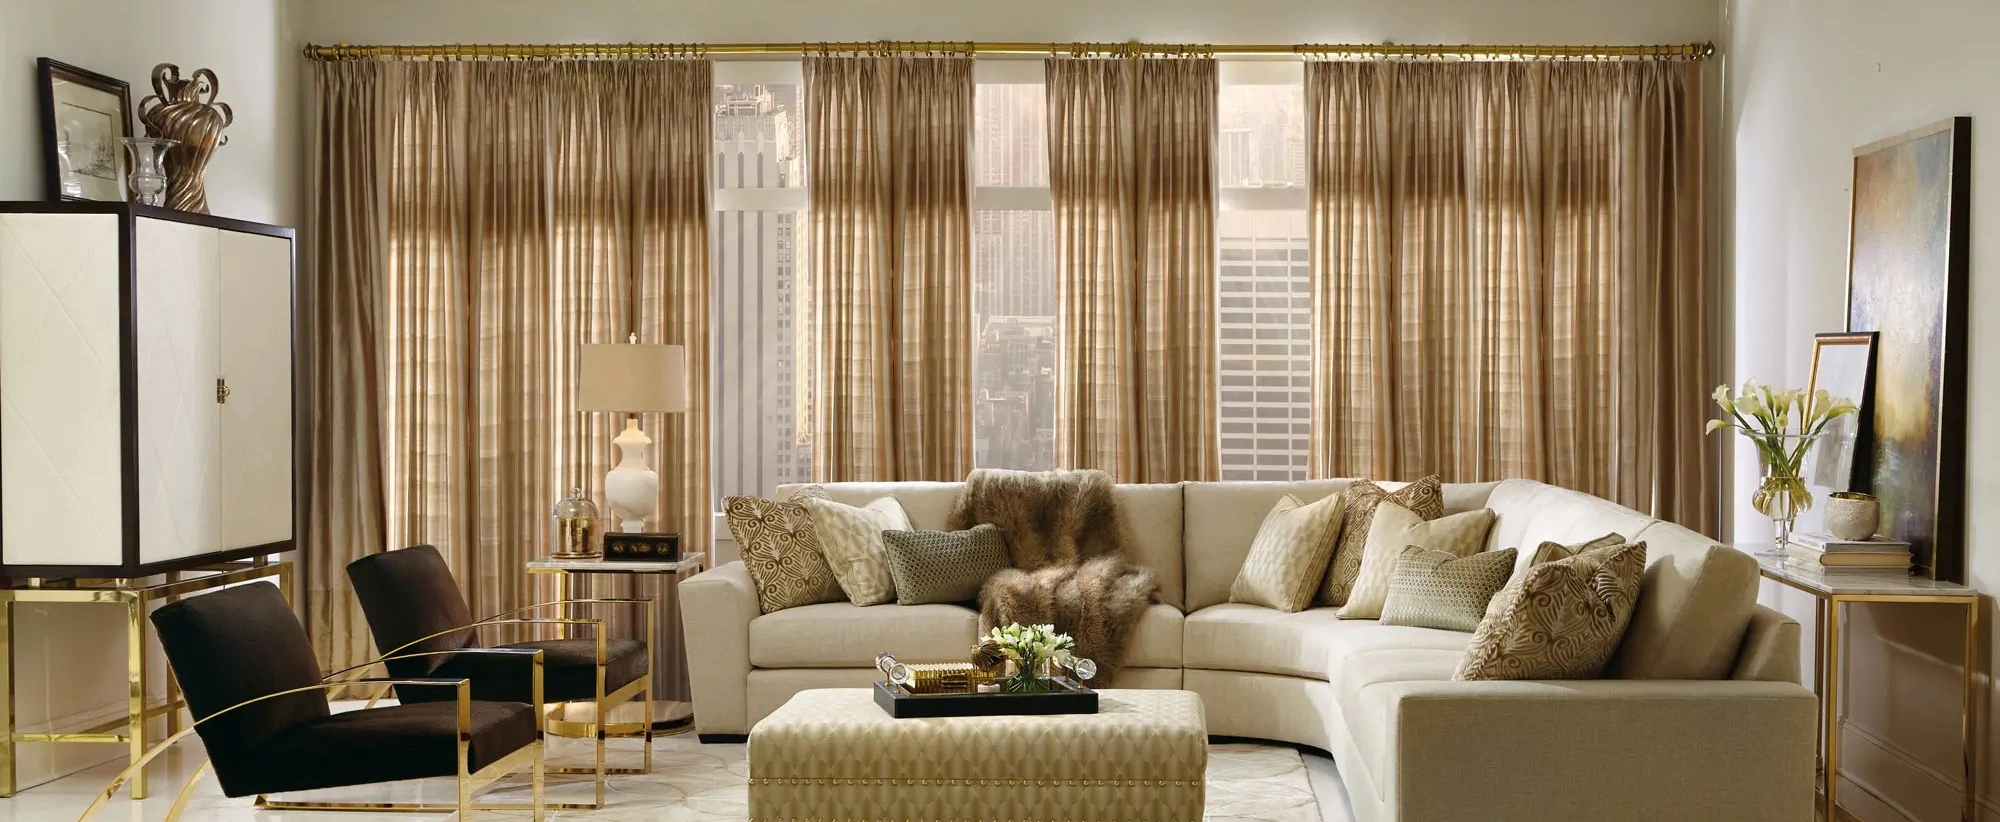 Modern interior with big widow curtains